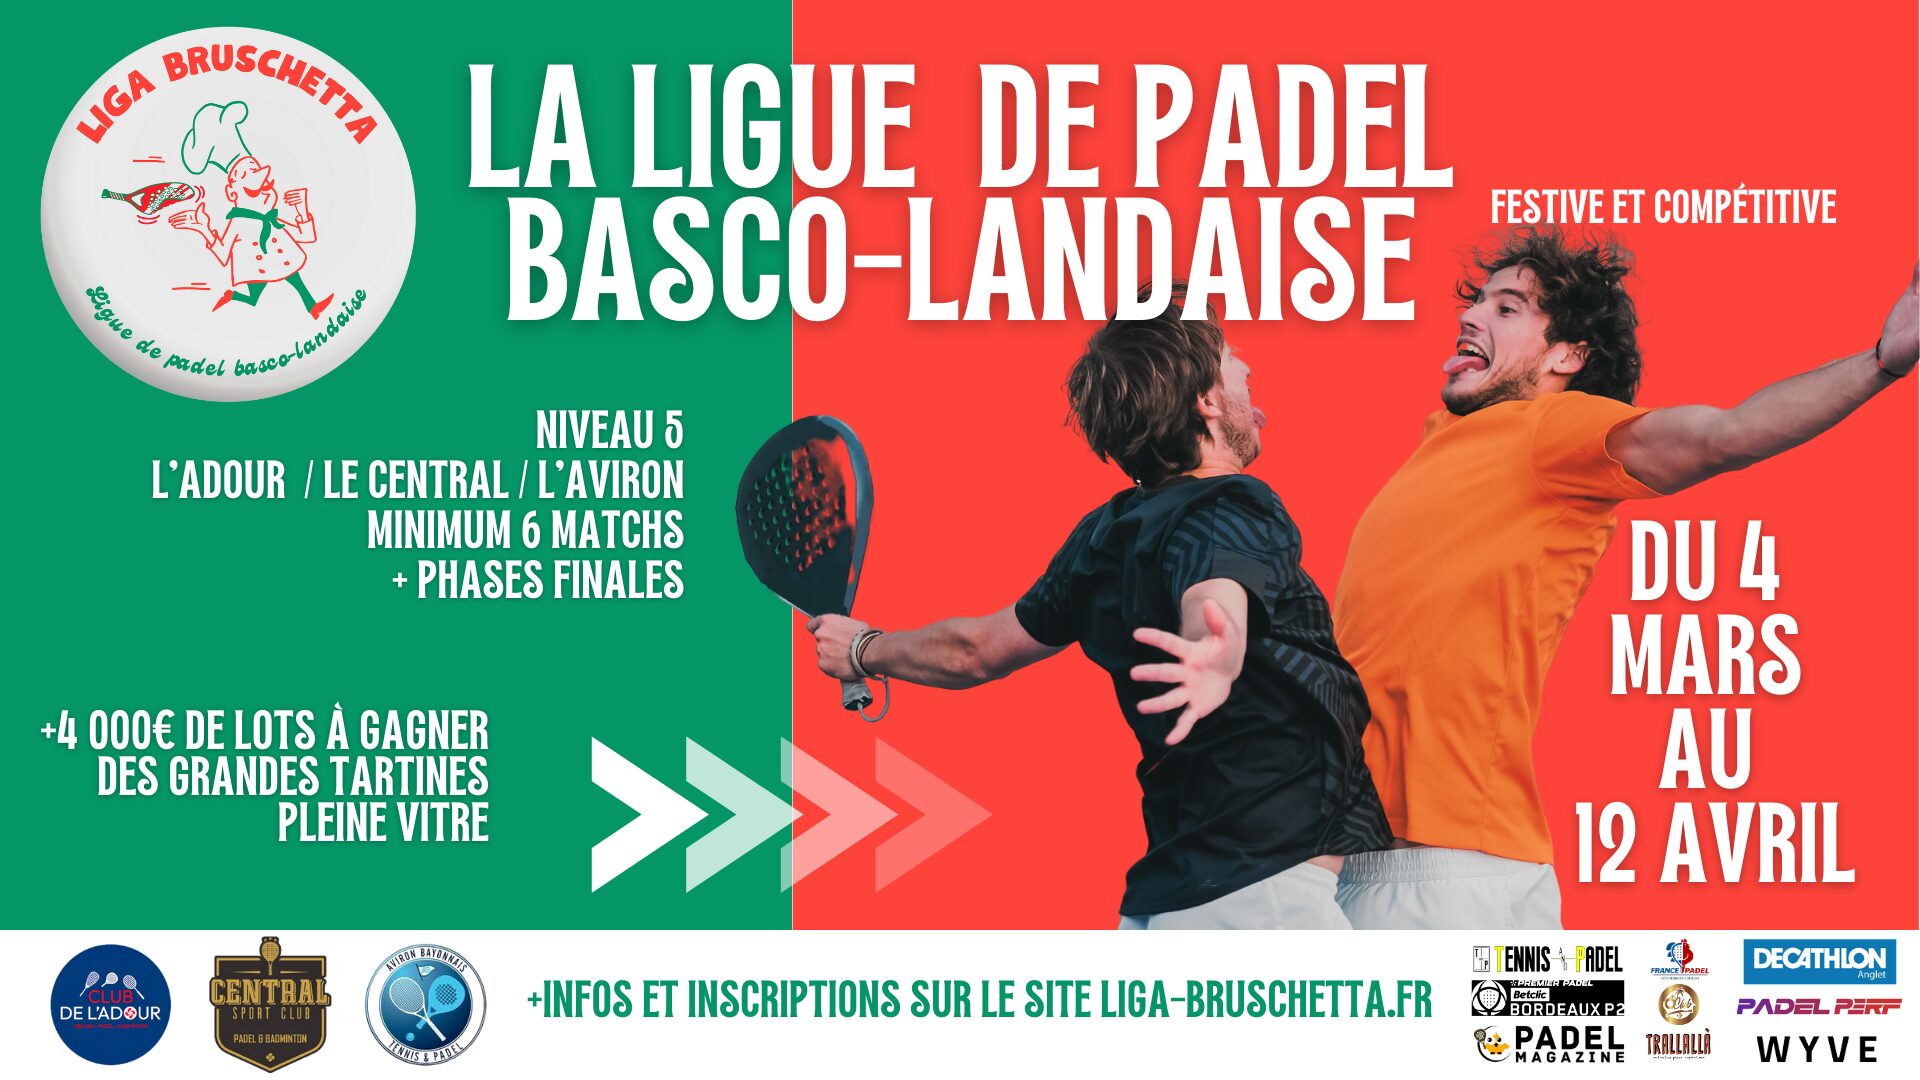 La Liga Bruschetta: the first league of padel Basque-Landese